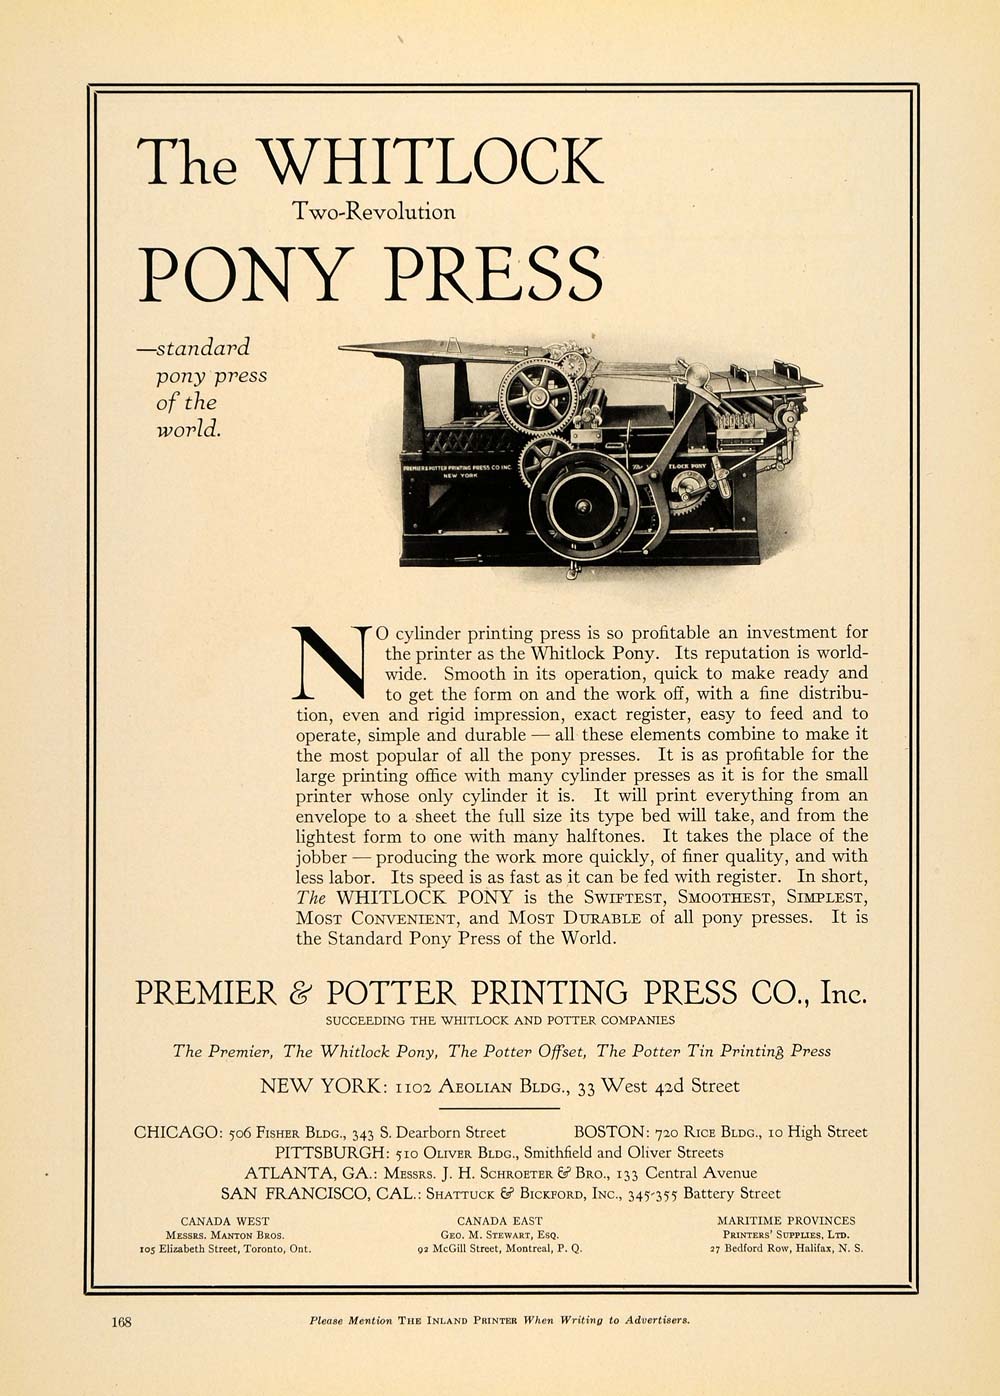 1920 Ad Premier & Potter Printing Whitlock Pony Press - ORIGINAL IPR1